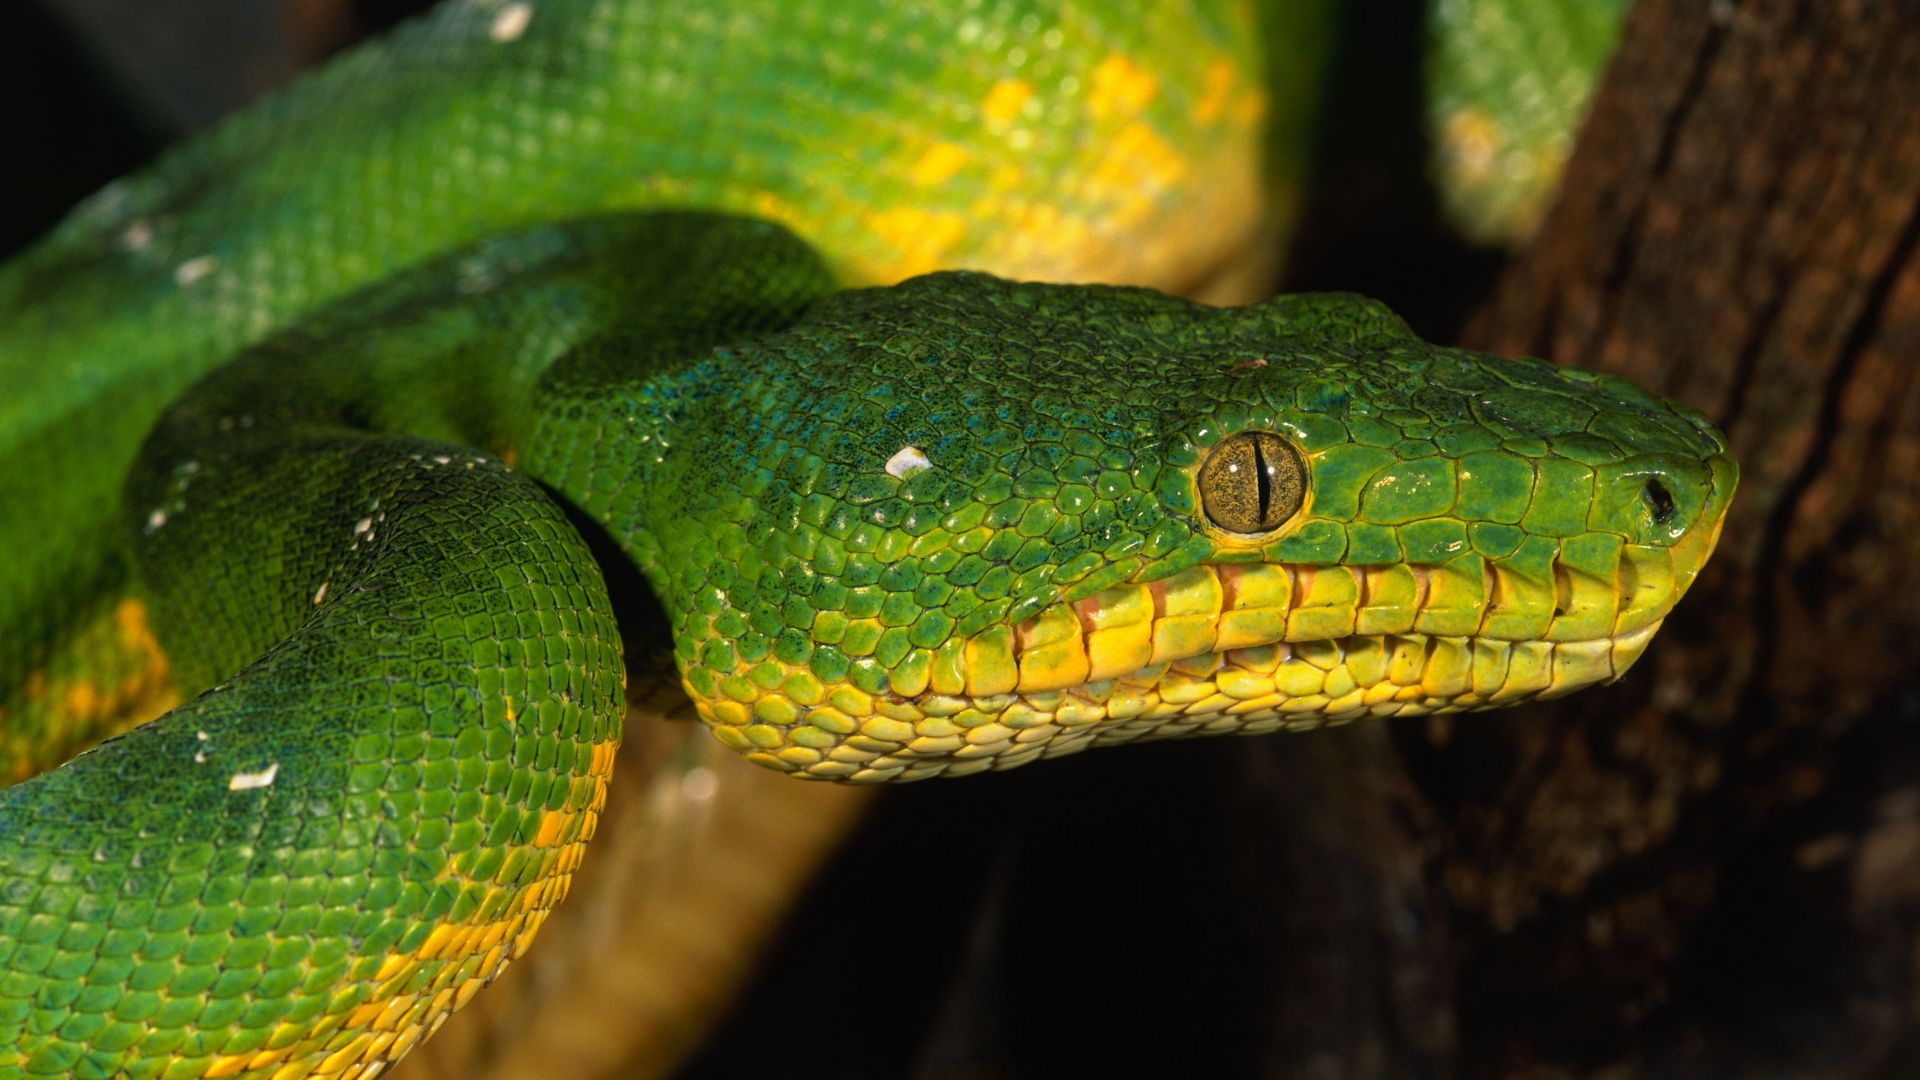 Питон, зеленый, Сингапур, змеи, глаза, Python, Singapore, zoo, Emerald, Green, snake, eyes, close-up (horizontal)